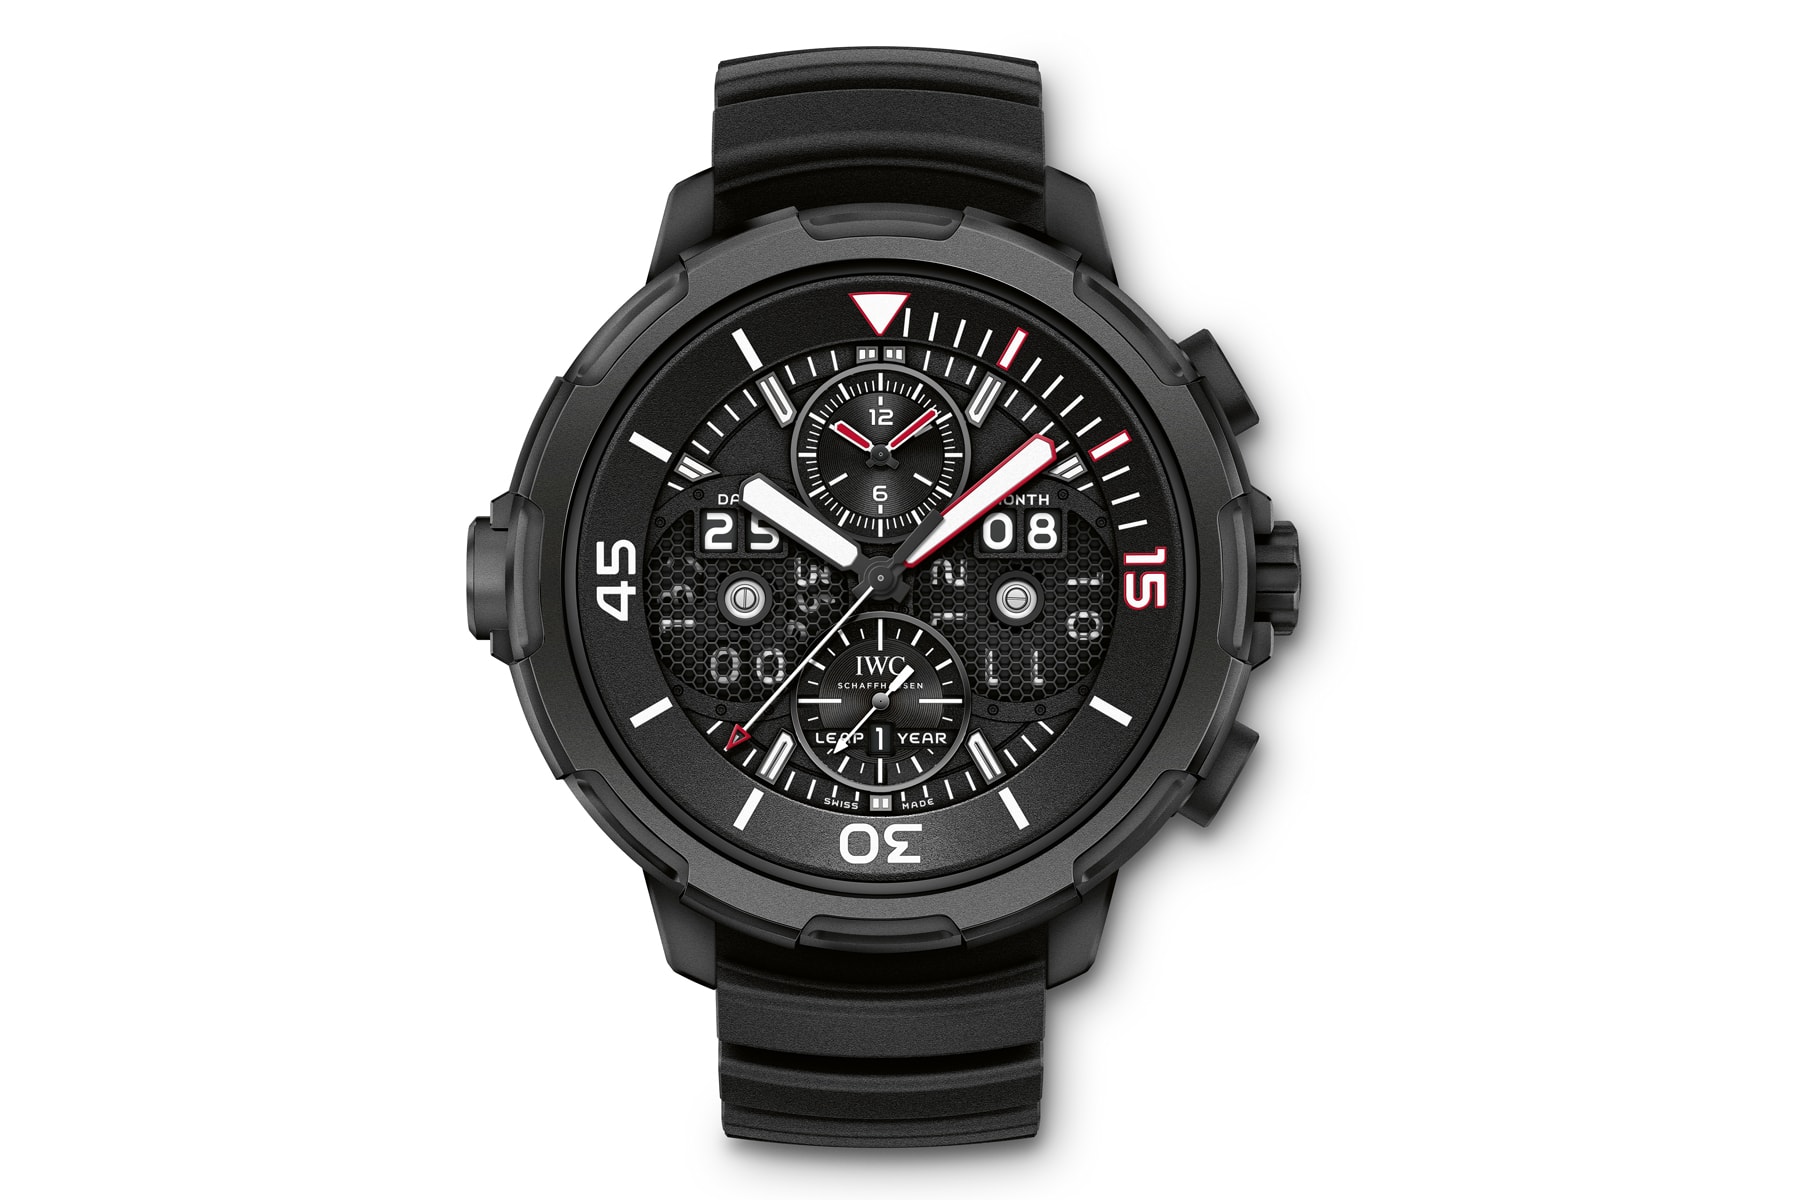 IWC 全新推出「海洋時計系列」50 周年限量版腕錶